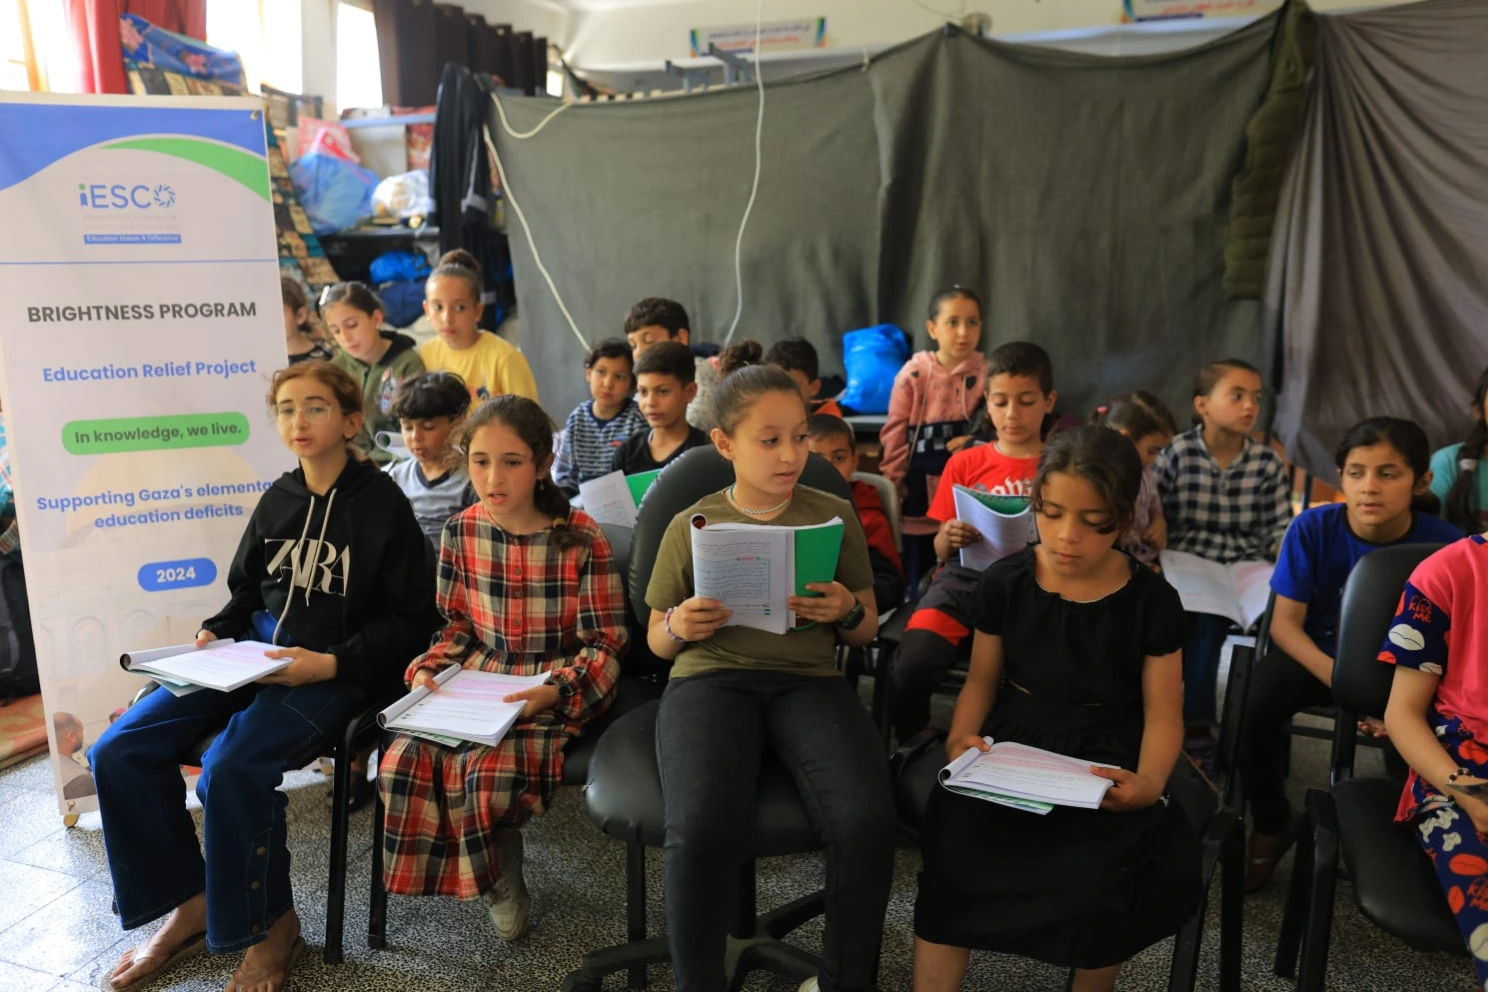 Uregent HELP :Education is Significant for Children in Gaza